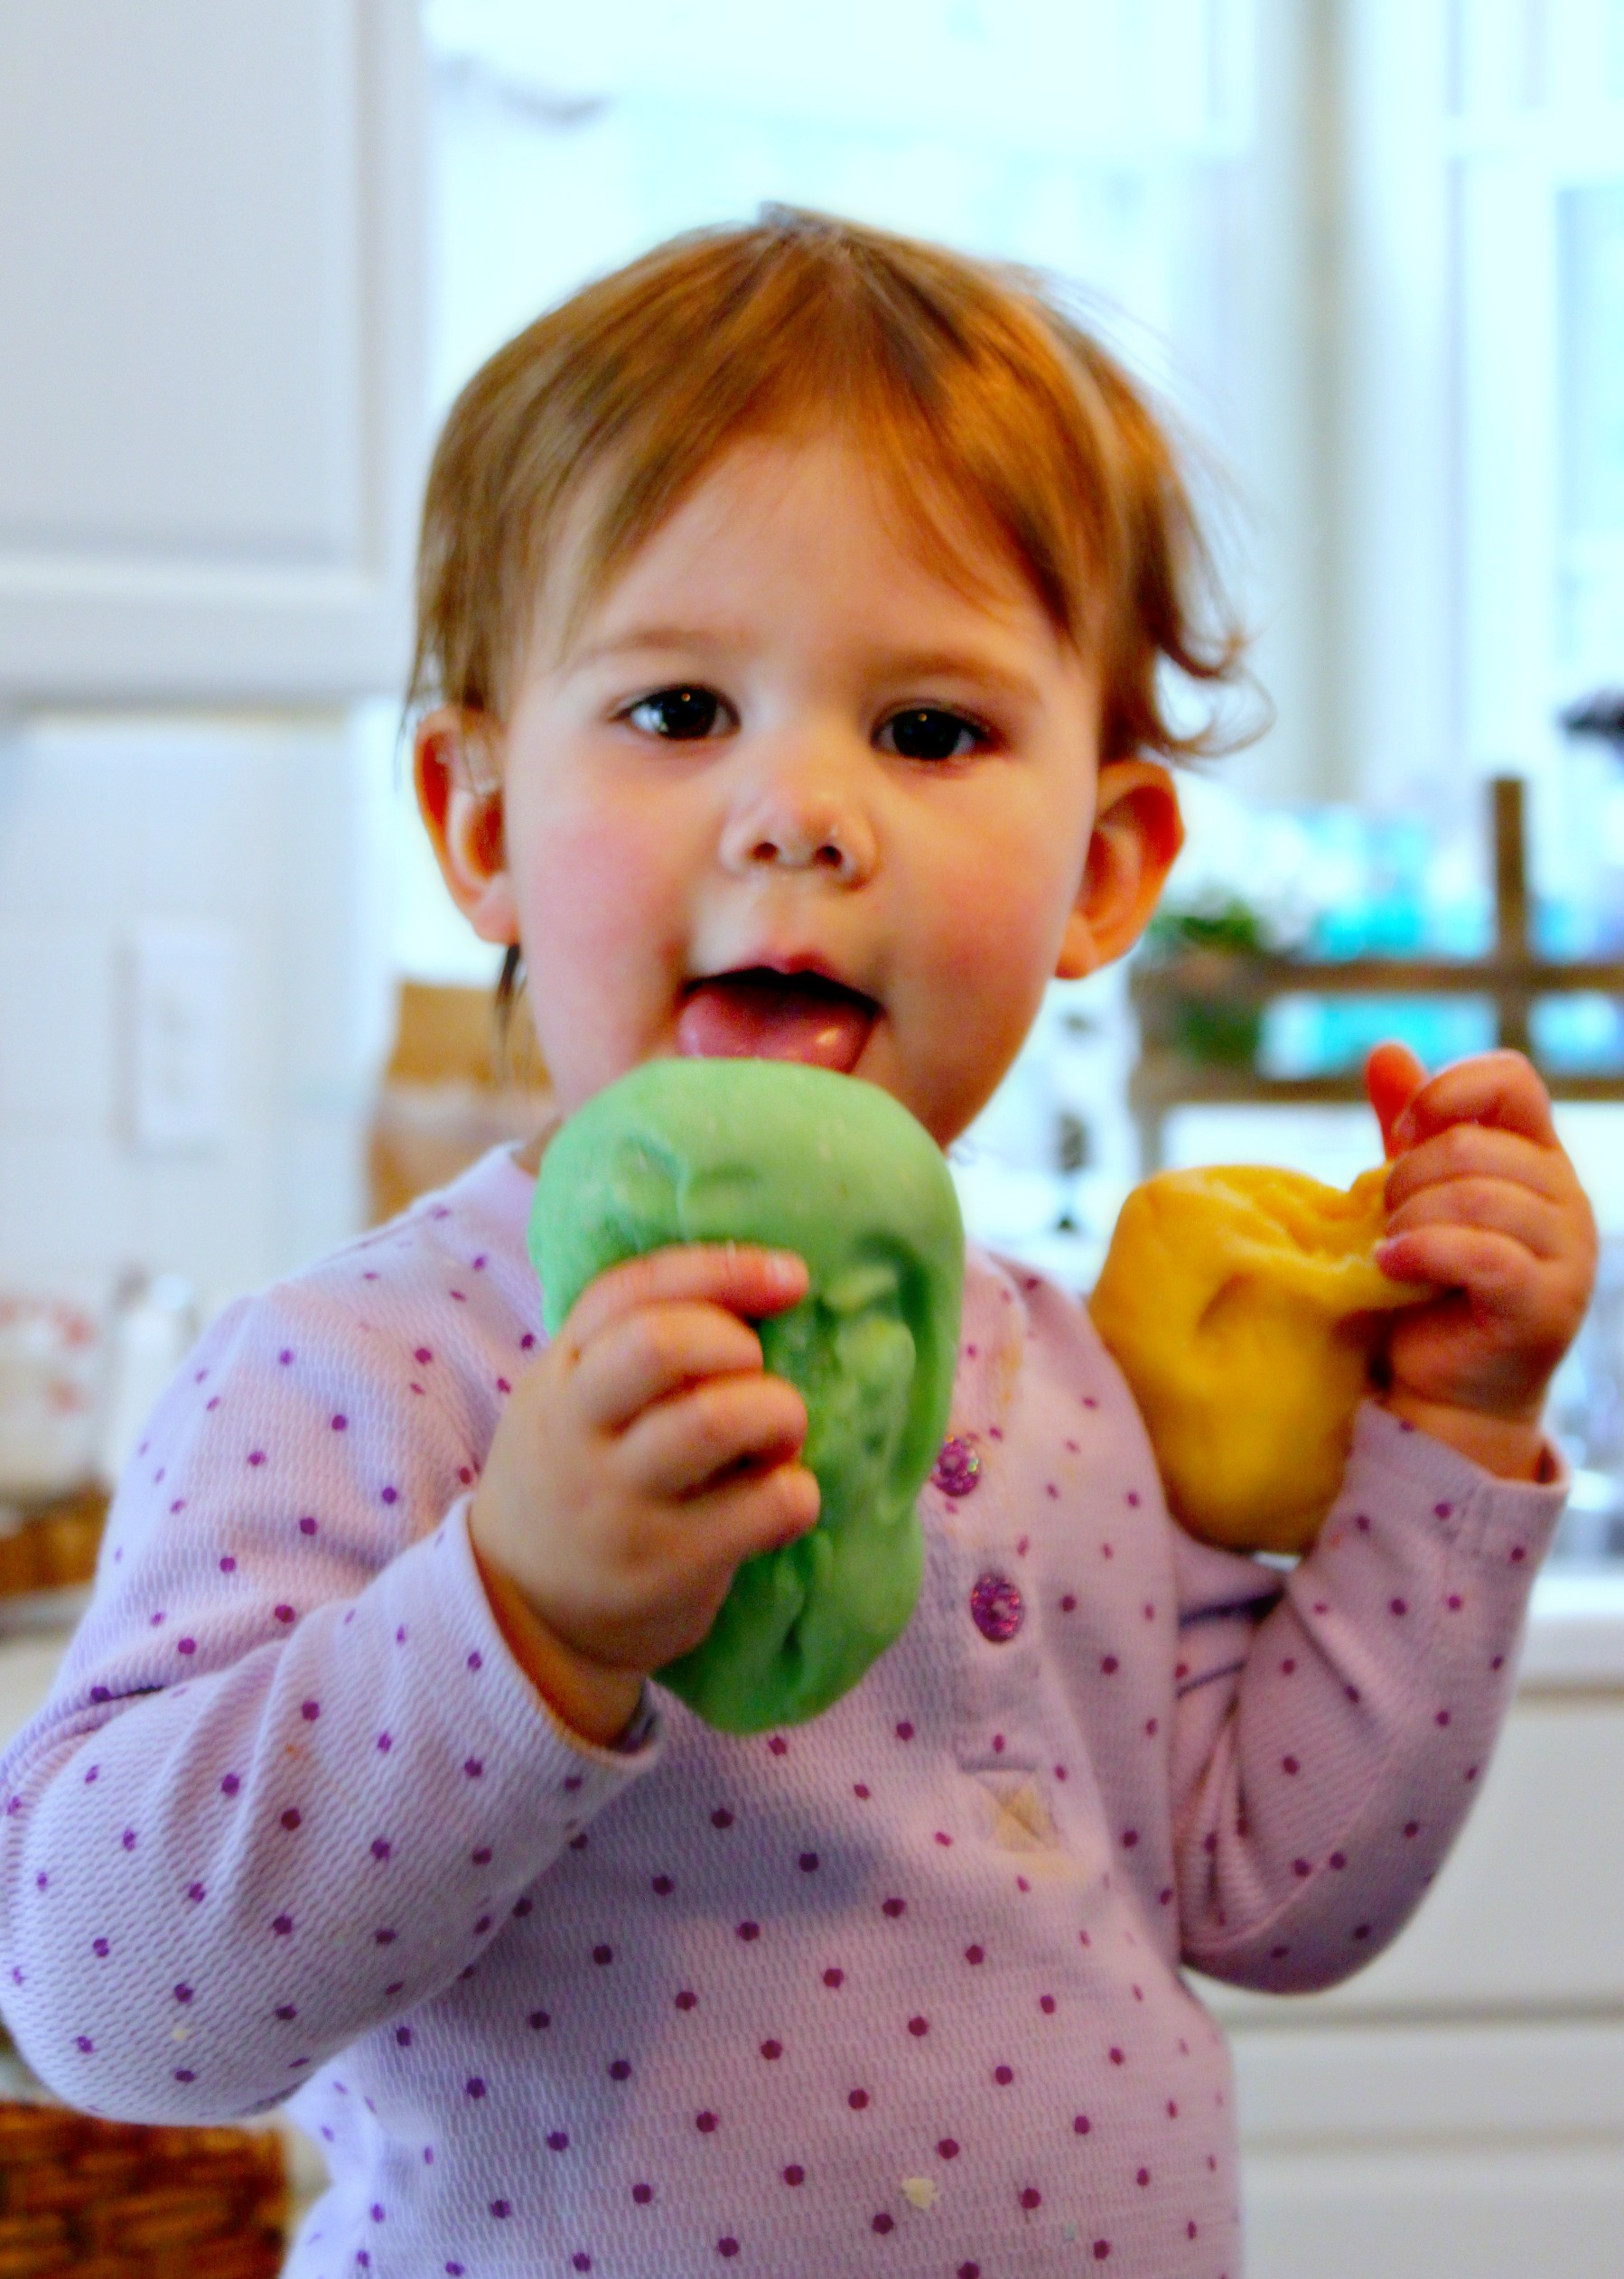 Get Non-Toxic Organic Playdough From DohDough